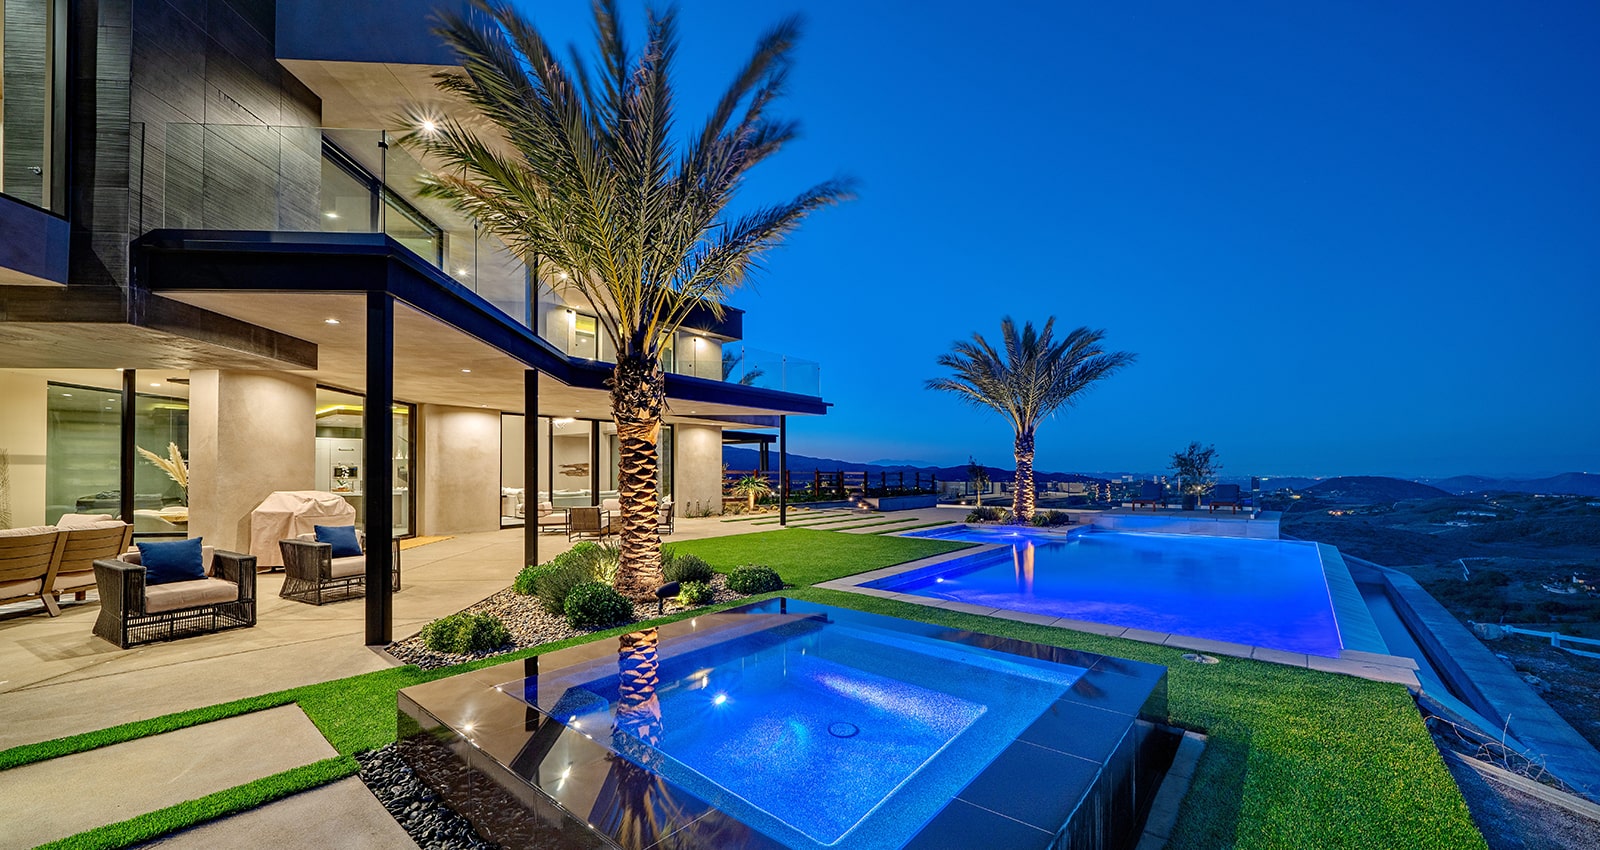 Mansion with pool in La Cresta, CA